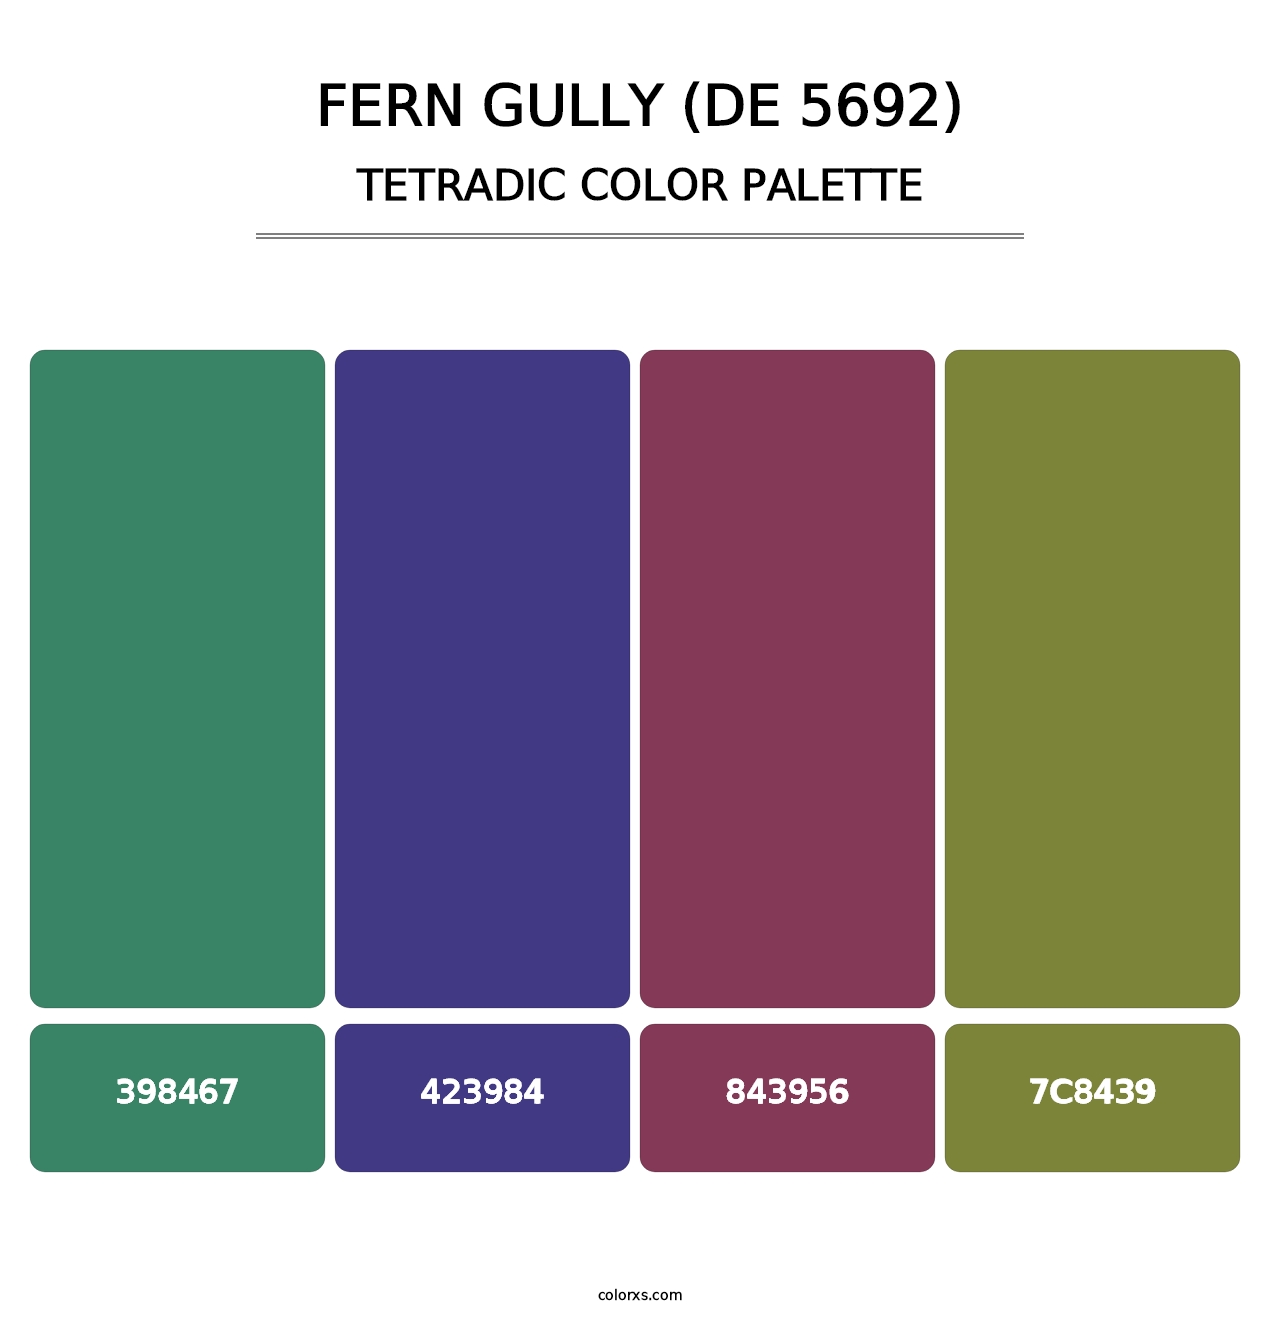 Fern Gully (DE 5692) - Tetradic Color Palette